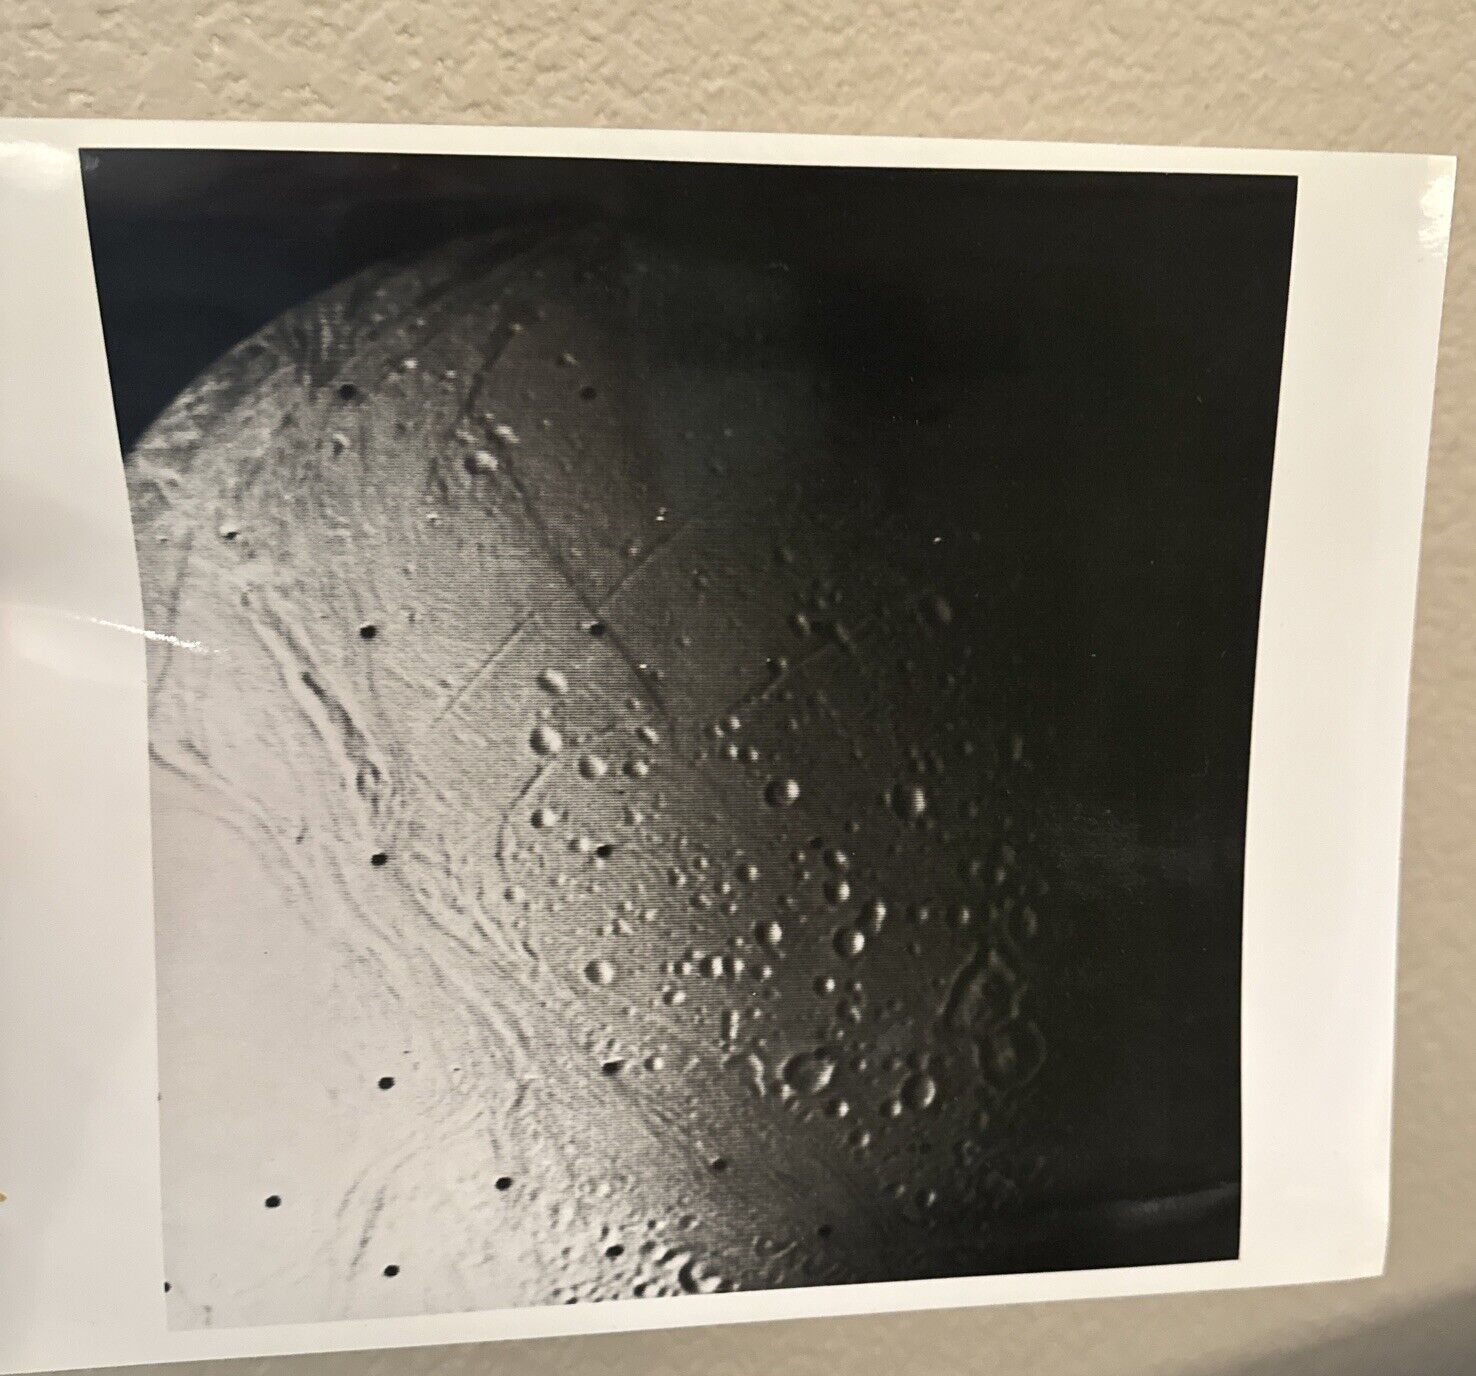 ORIGINAL JPL NASA SATURN MOON ENCELADUS VOYAGER 2 PHOTO KODAK PAPER 08/26/1981